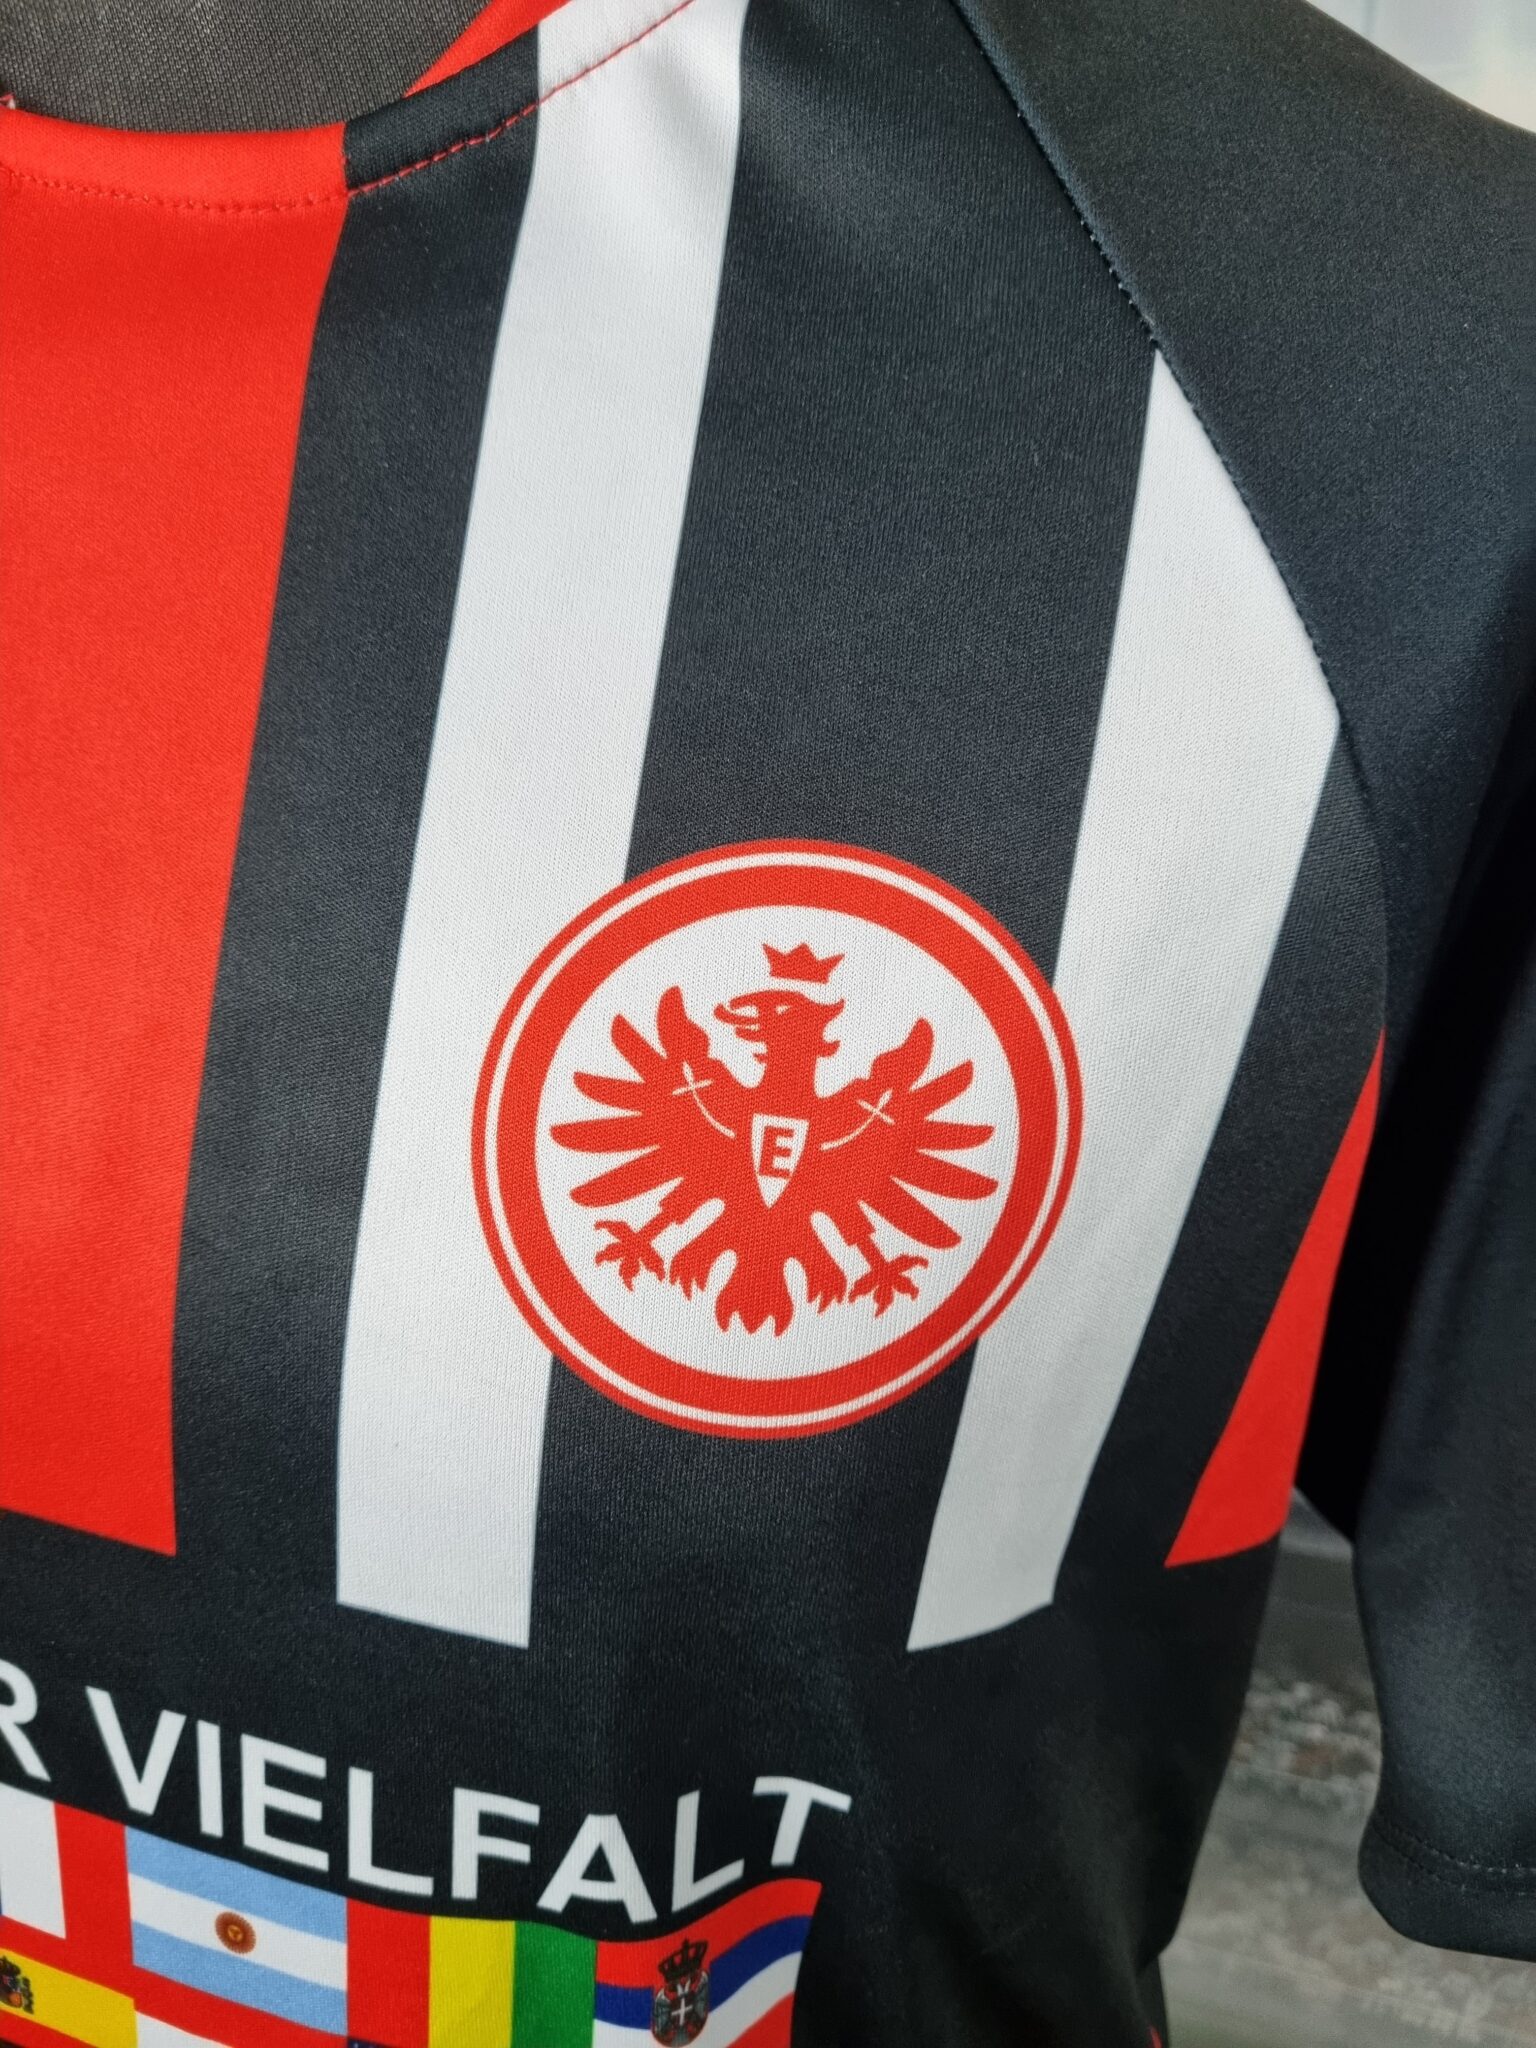 Eintracht Frankfurt 2019/2020 Special Trikot Filip Kostic #10 Jersey Shirt Serbia - Sport Club Memories